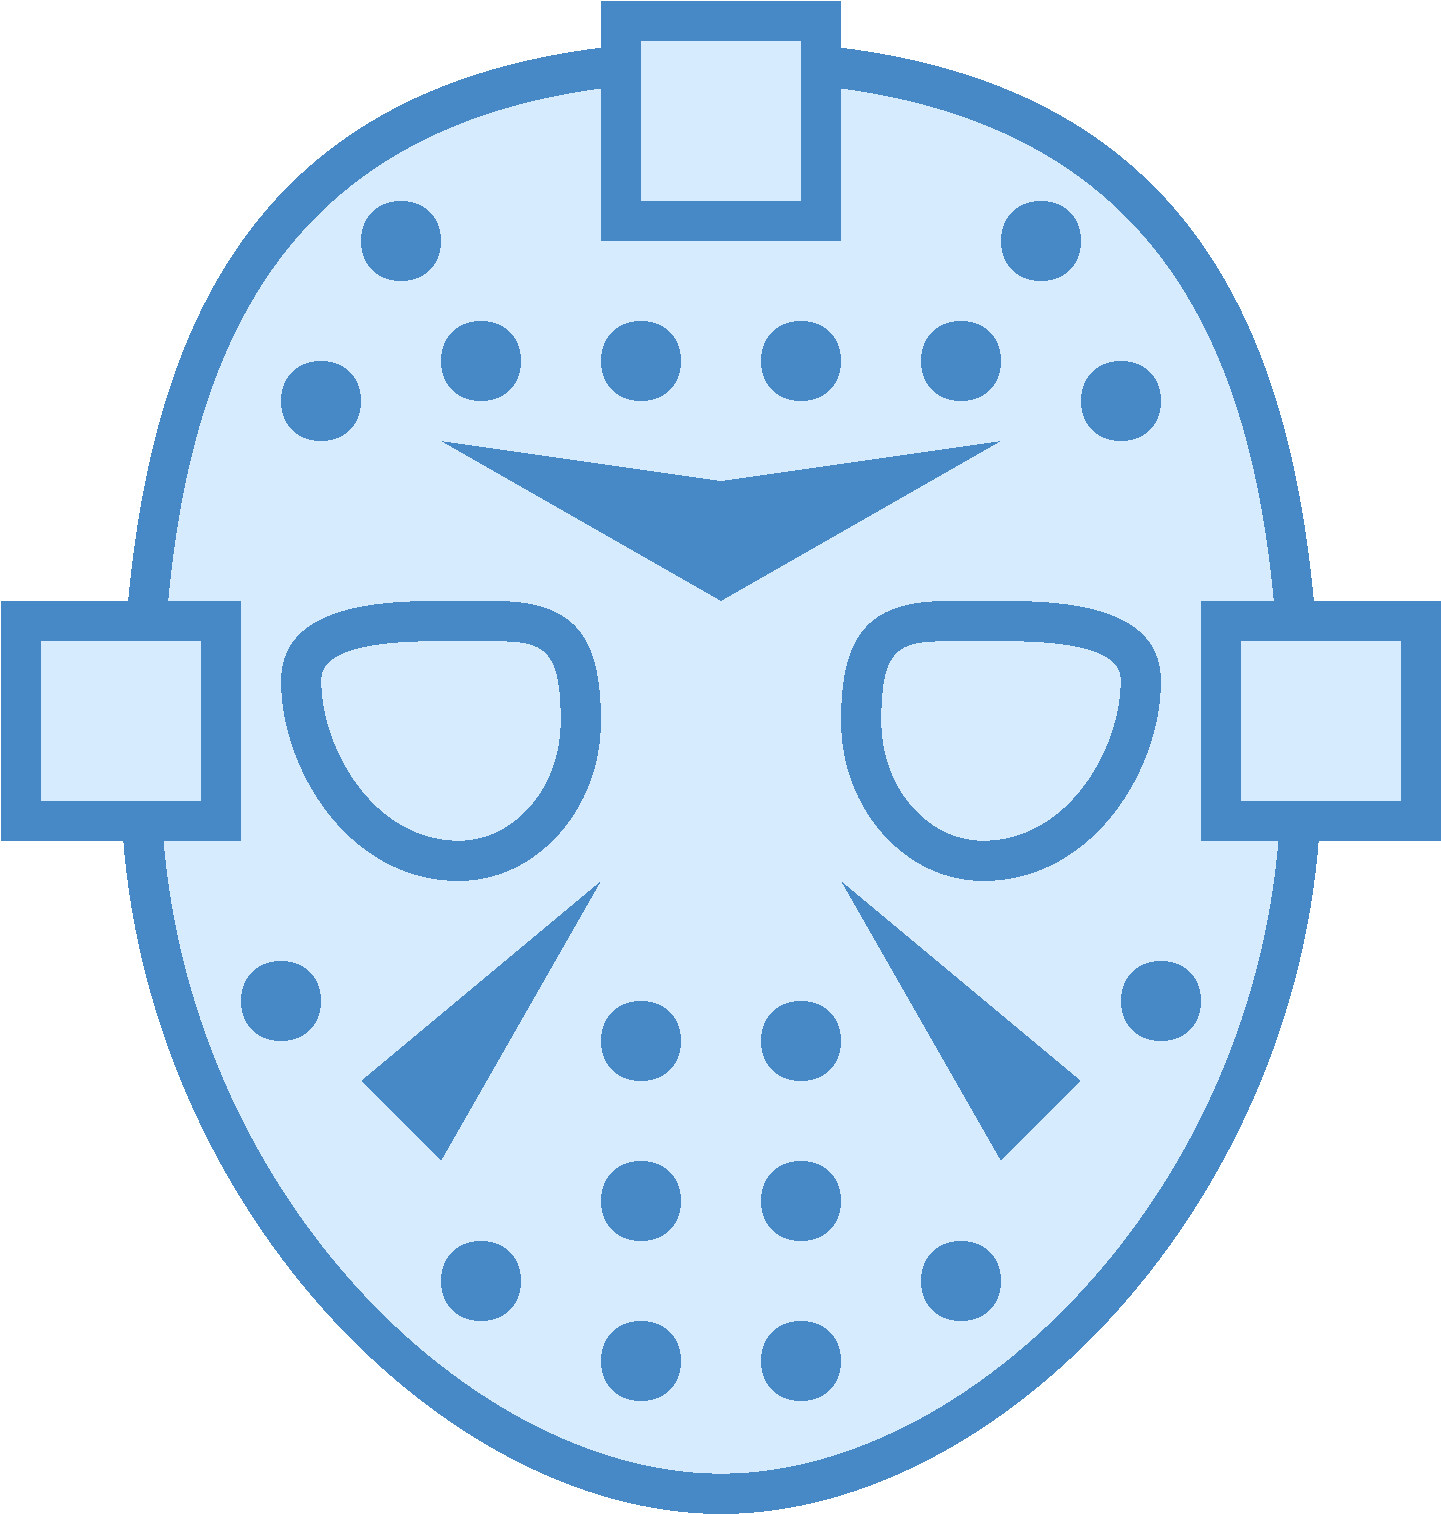 Jason Voorhees Mask Transparente